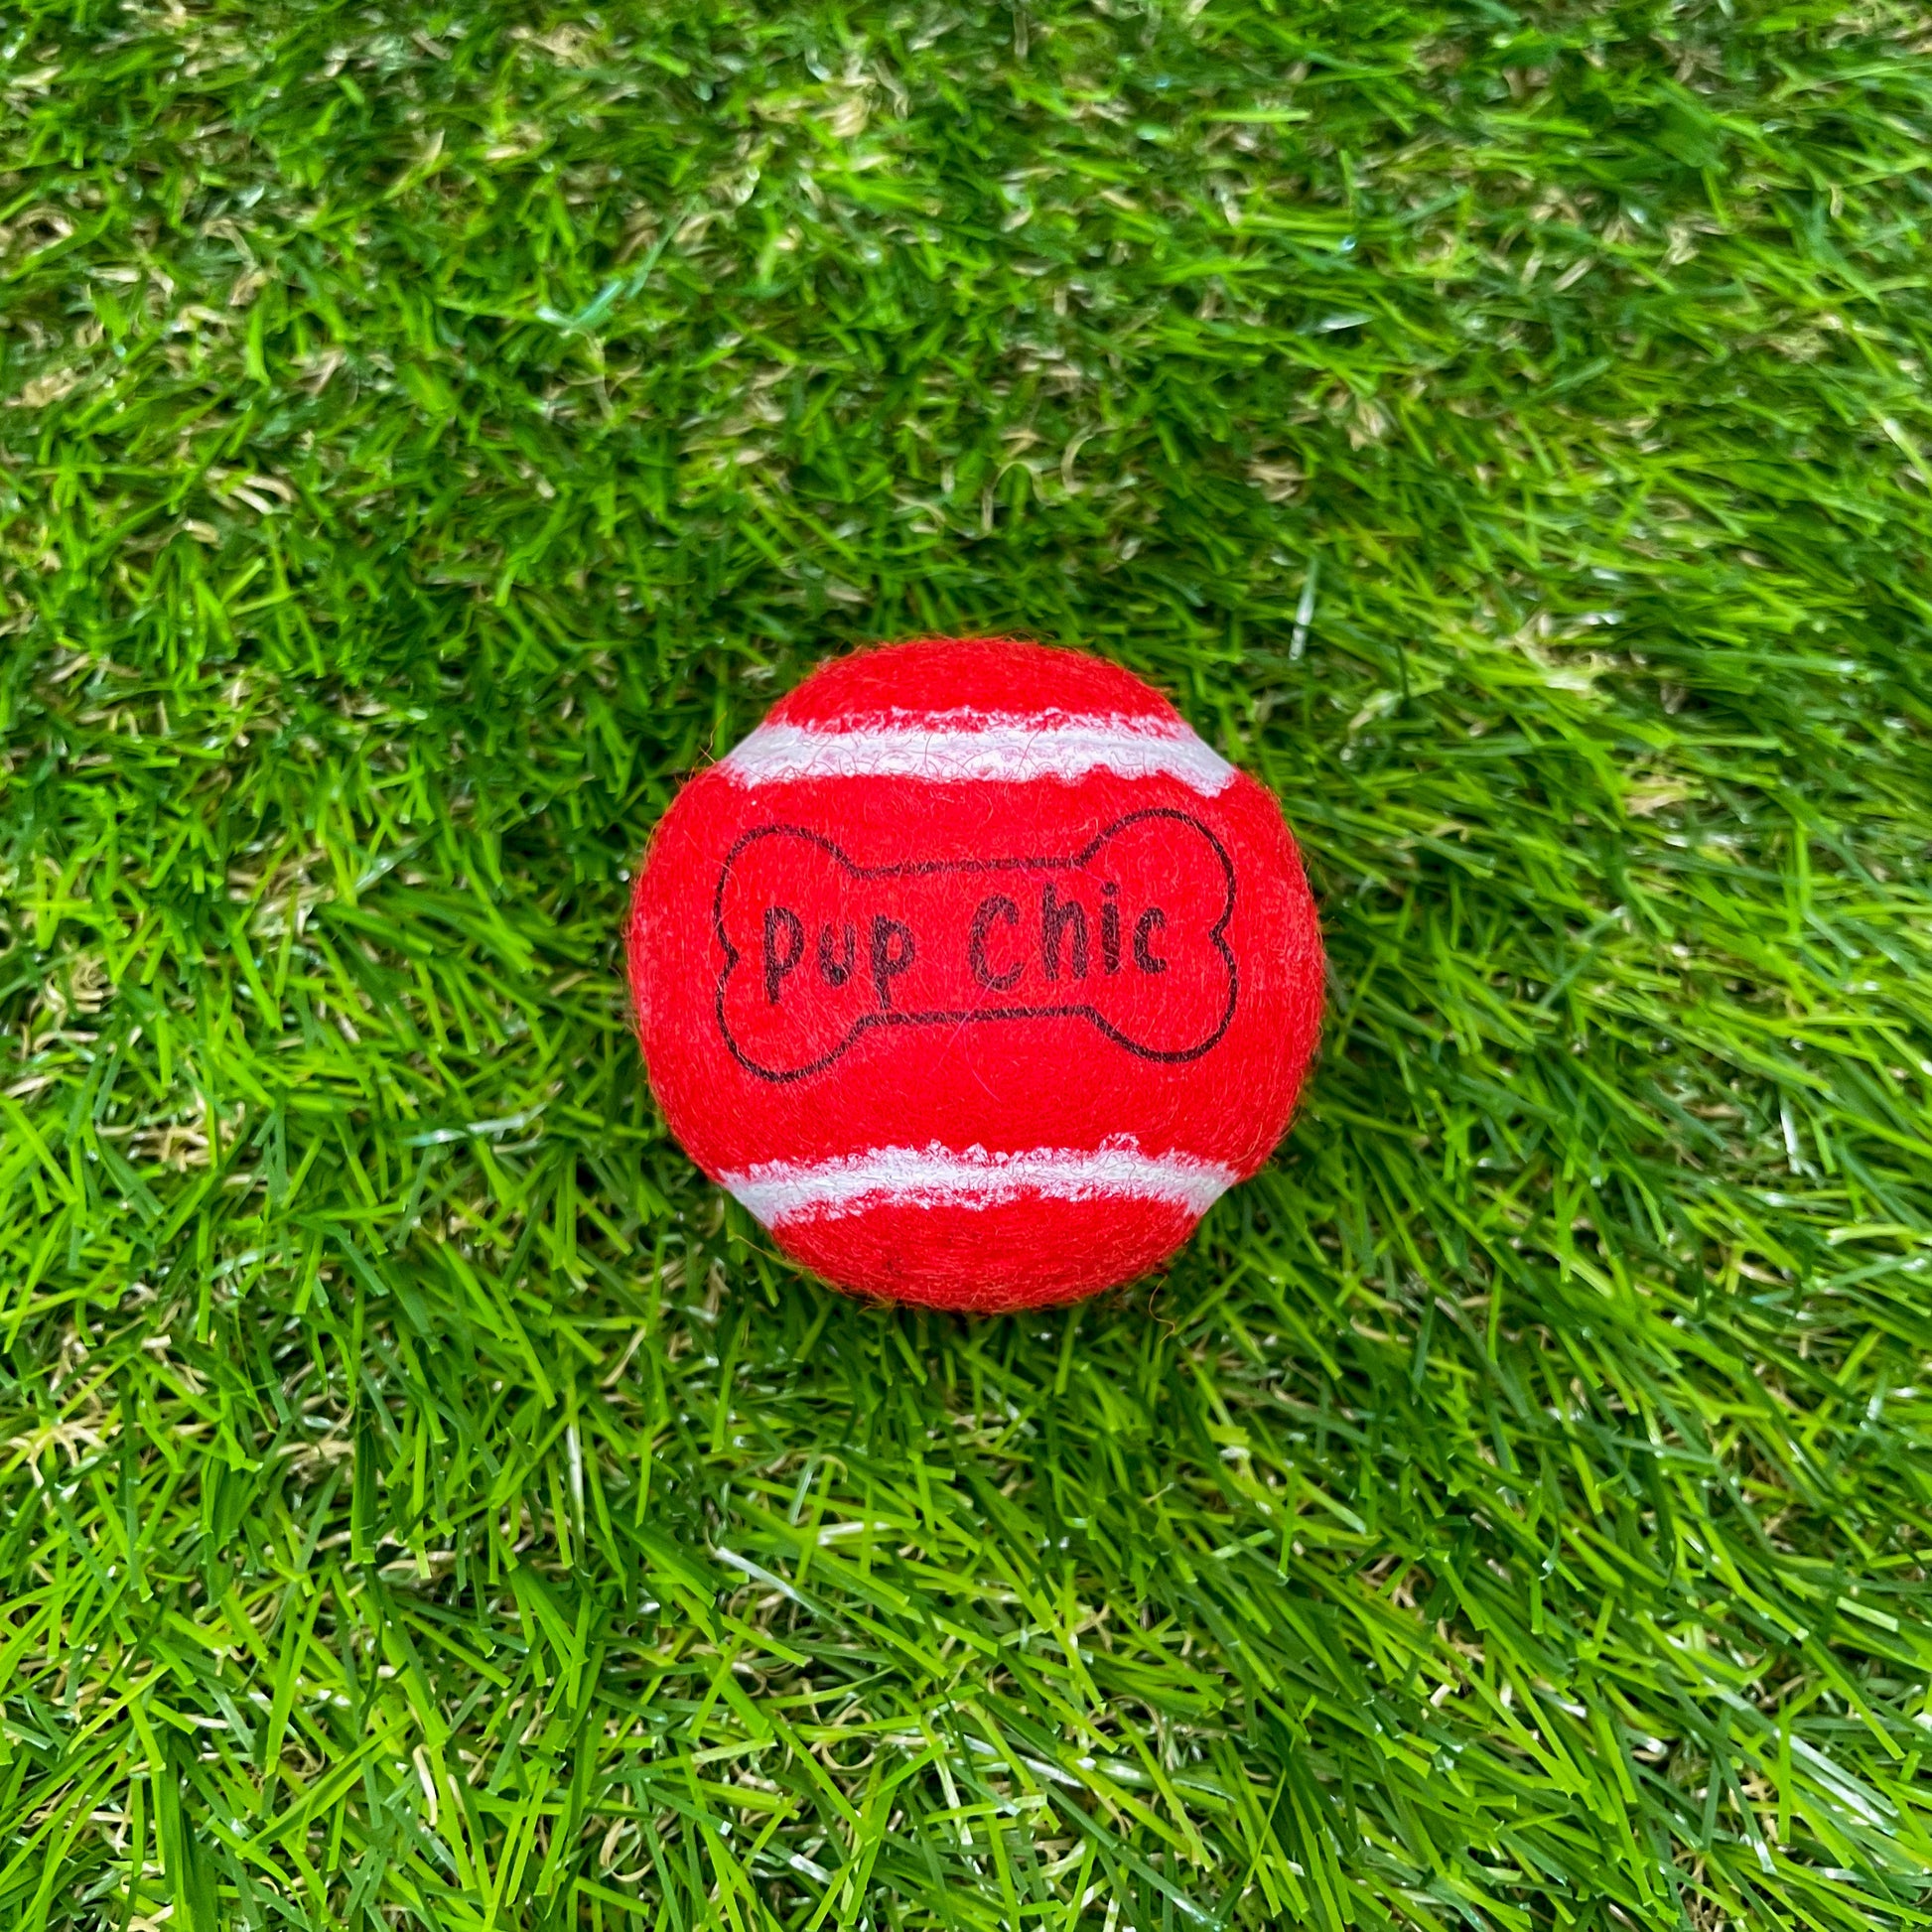 chic puppy ball - 42mm size tennis ball fire red